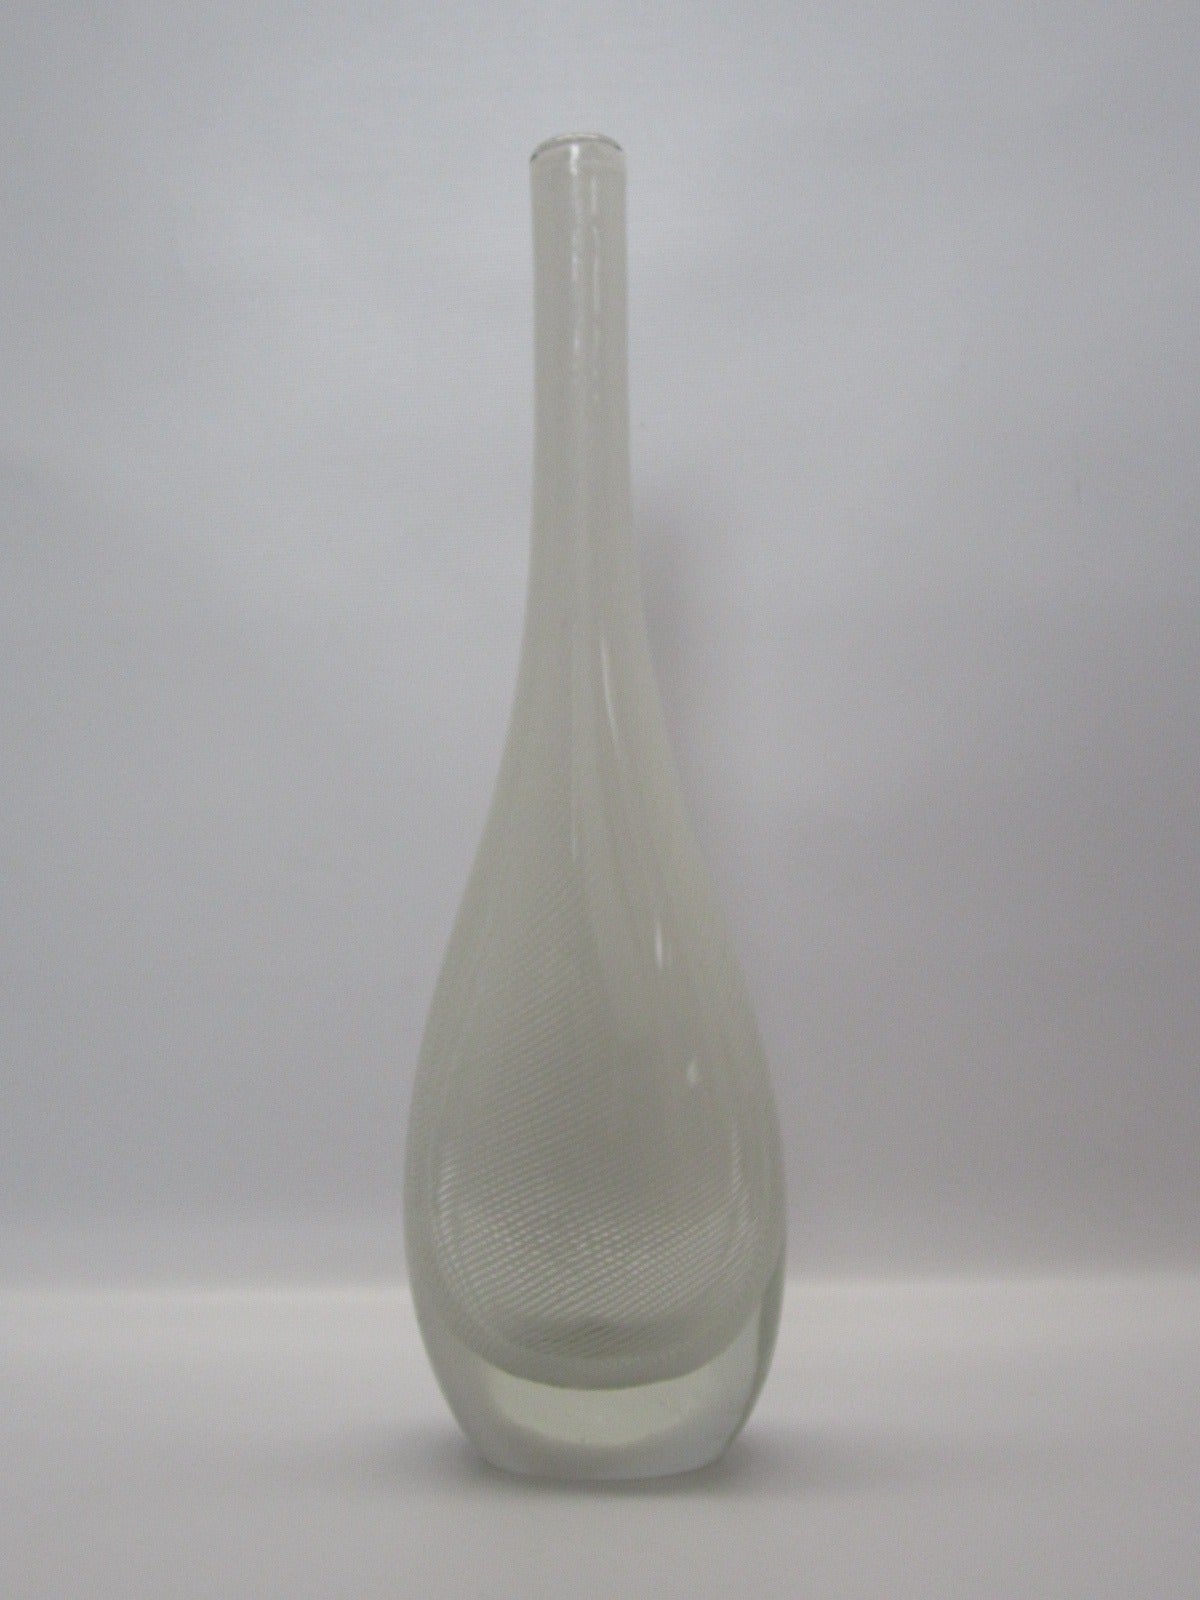 Stunning handblown Murano glass vase with white swirl internal stripes. Original sticker remains on bottom.